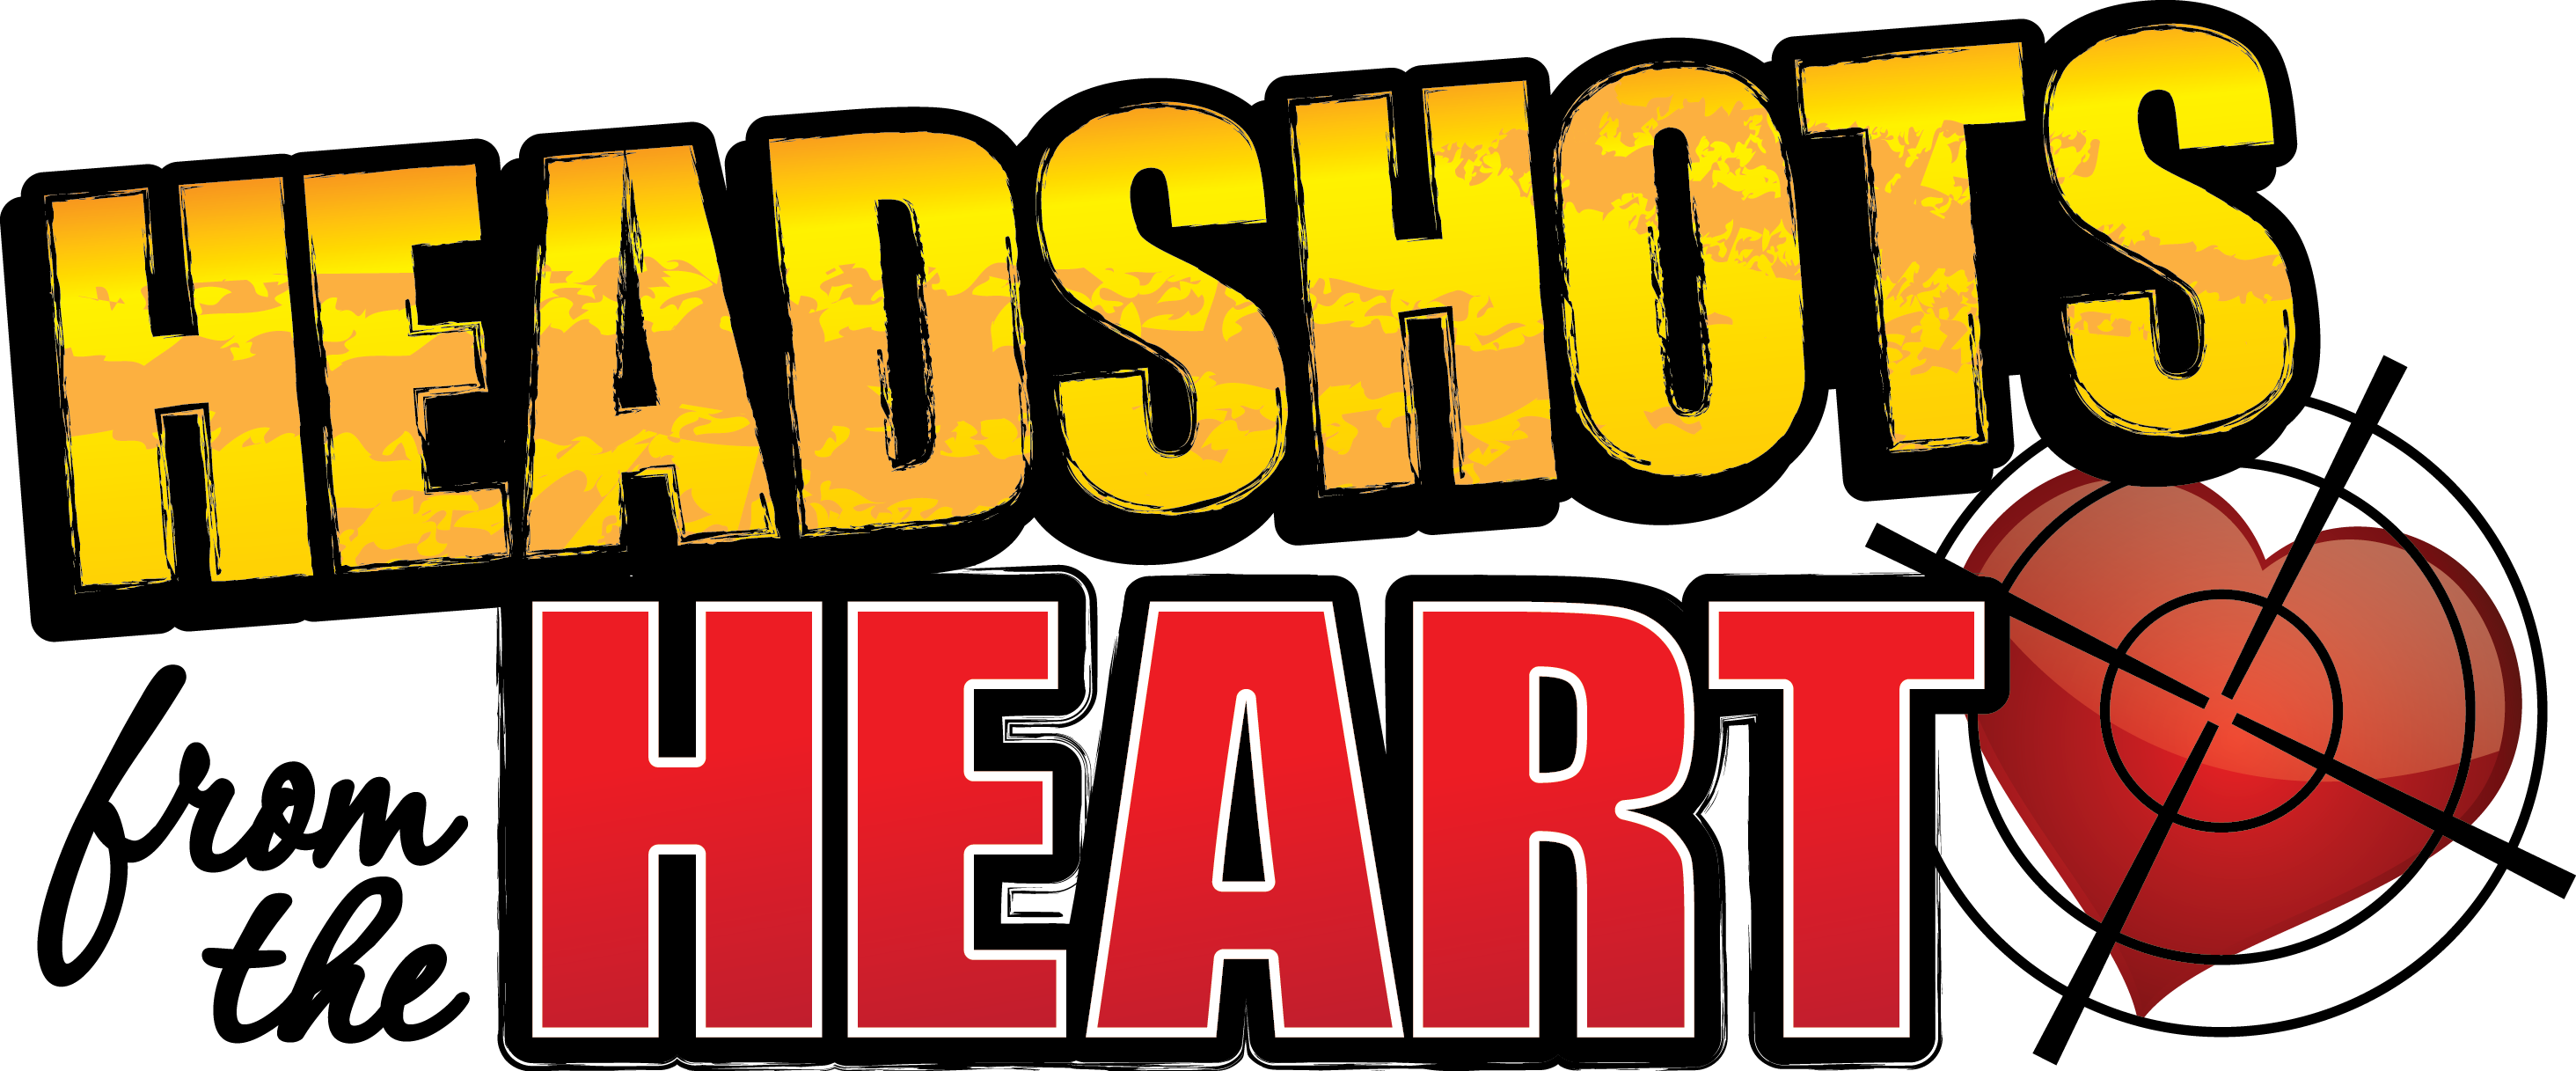 Headshtos from the Heart, online charity videogame marathon